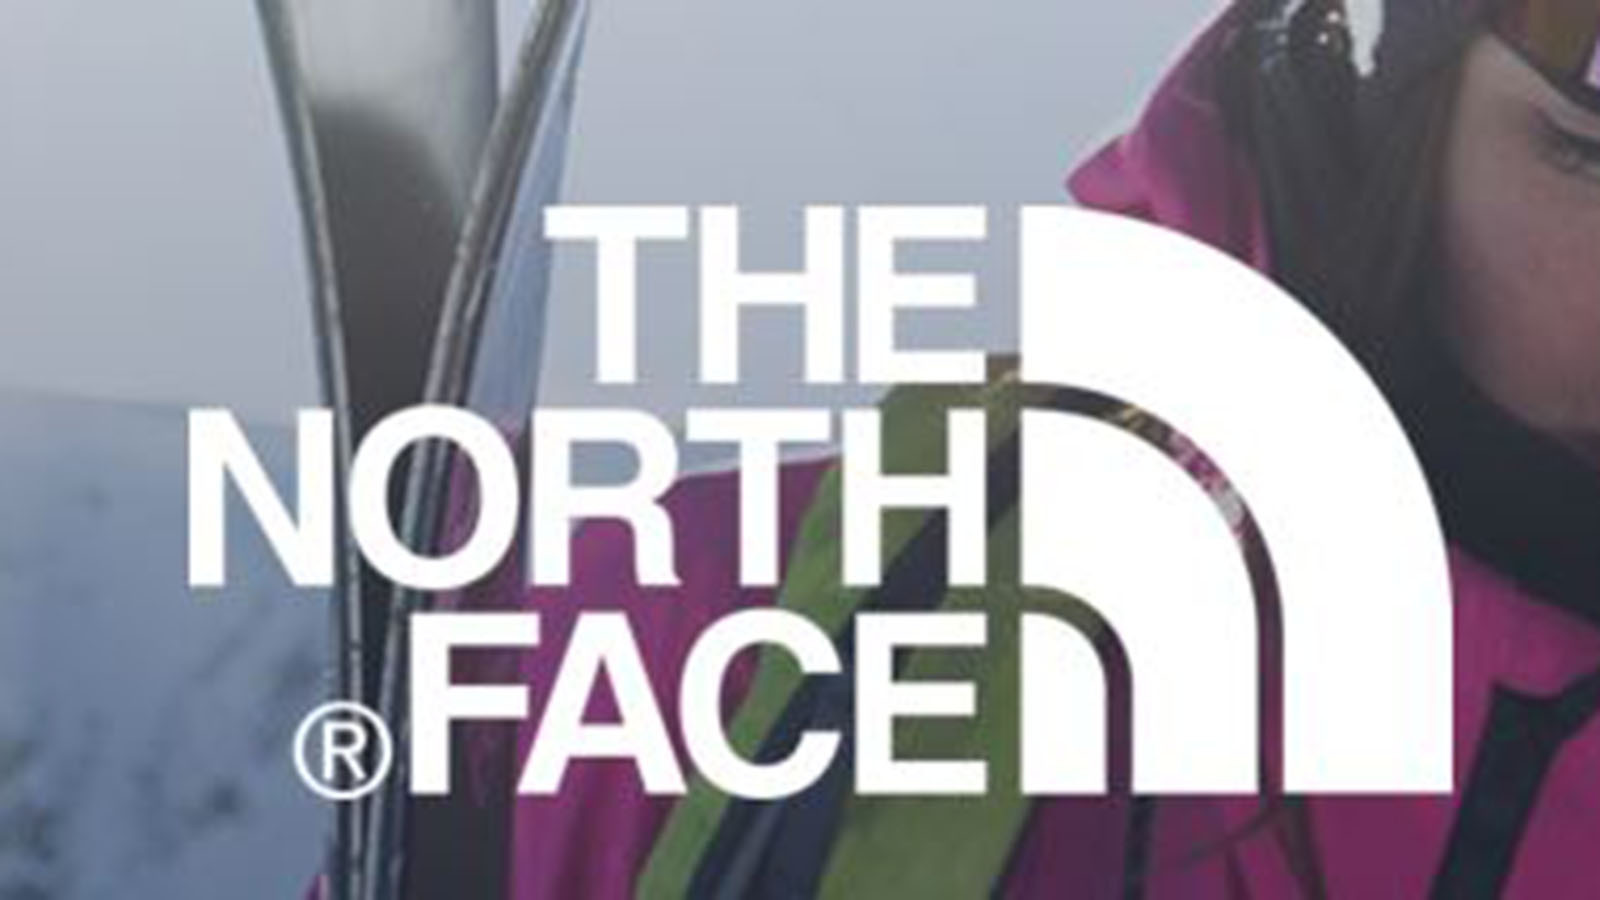 north face company